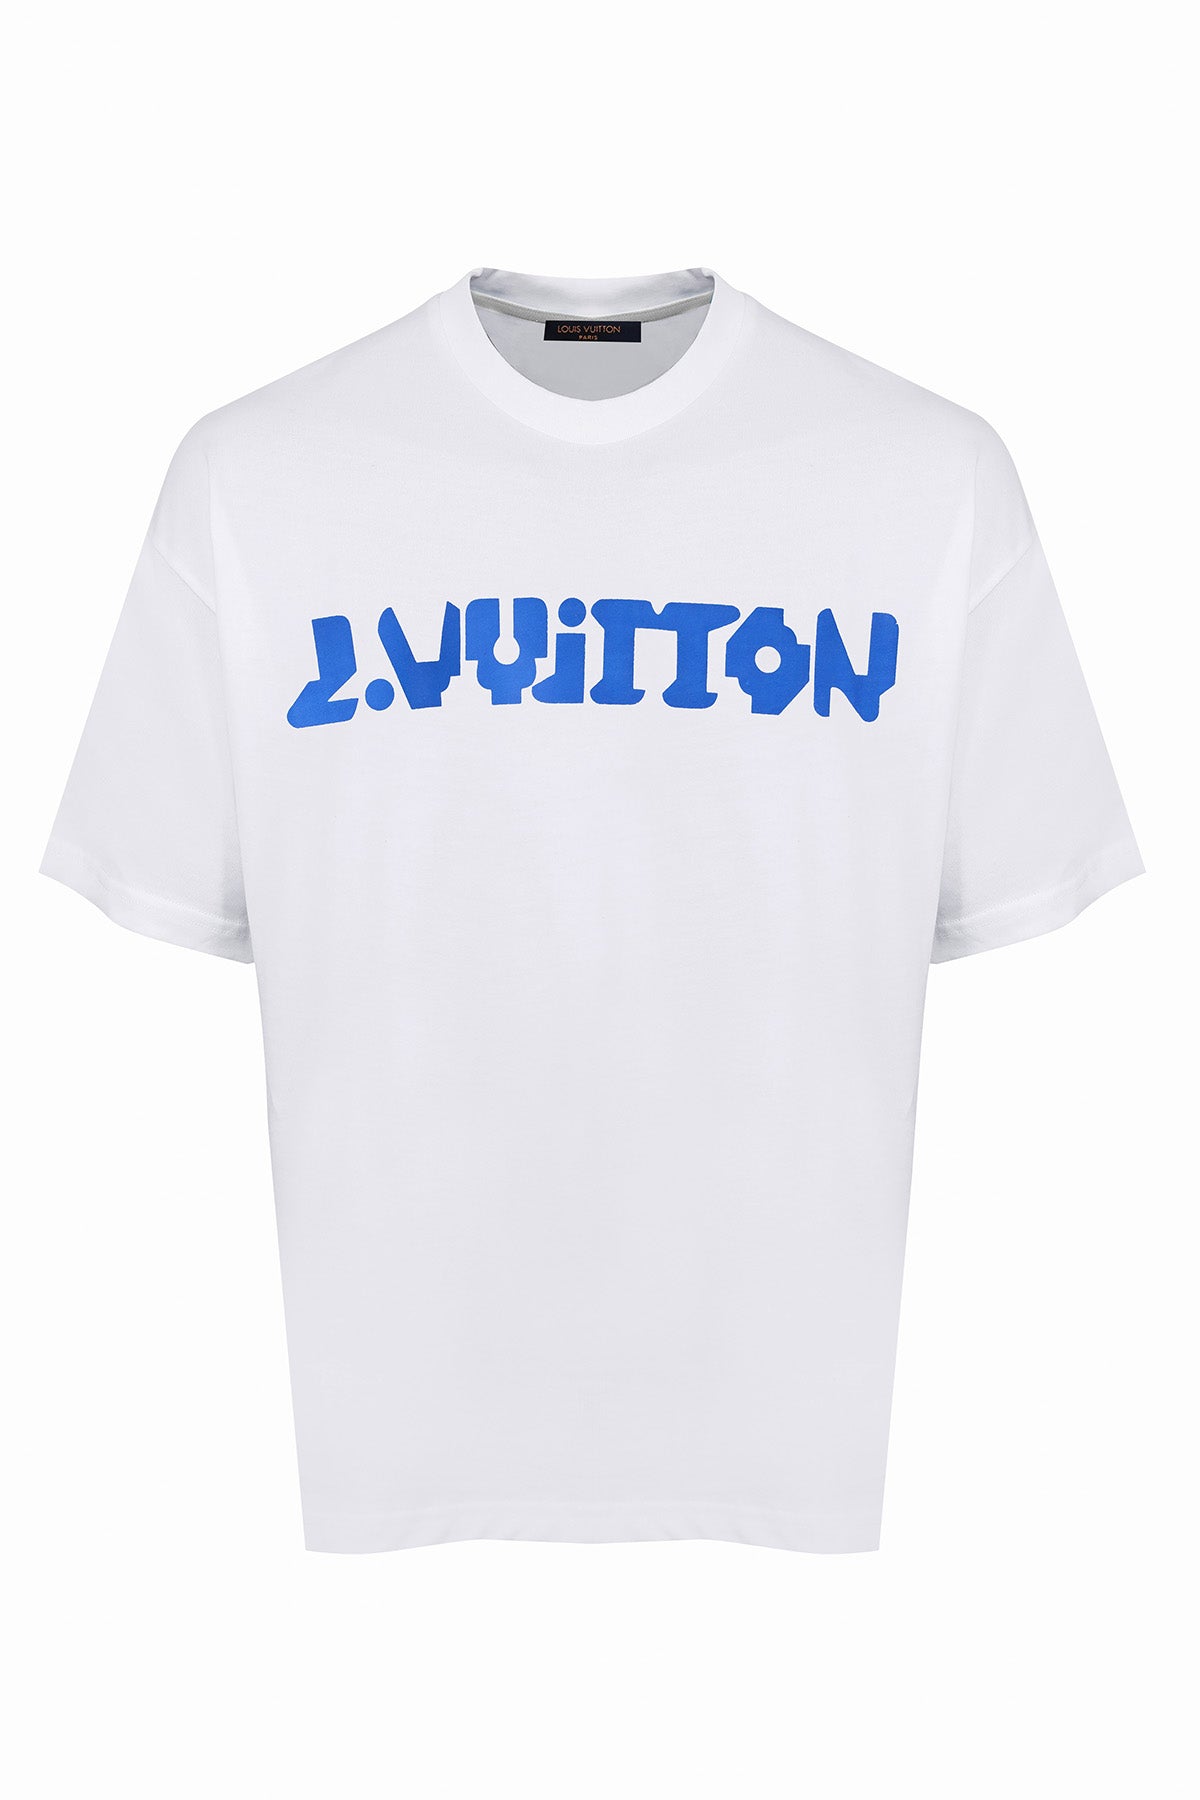 Corbyn Louis Vuitton T-Shirt — Stitch To Stitch